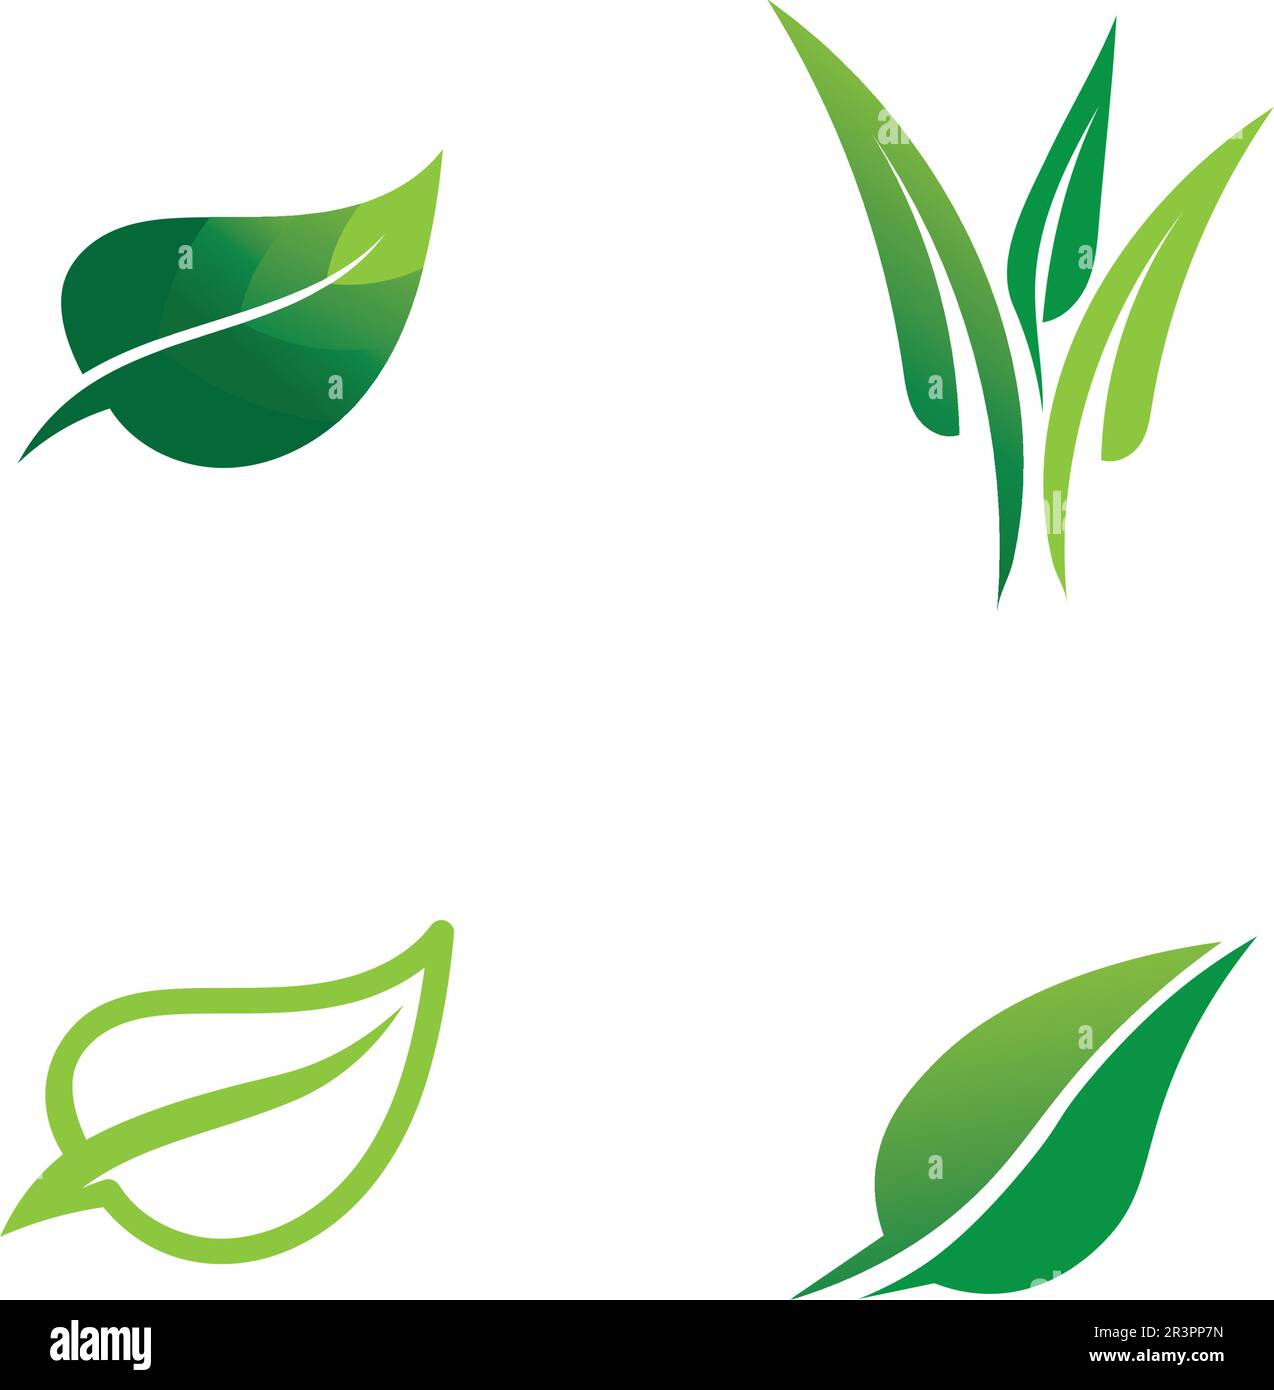 Tree leaf vector logo design eco friendly concept Stock Vector